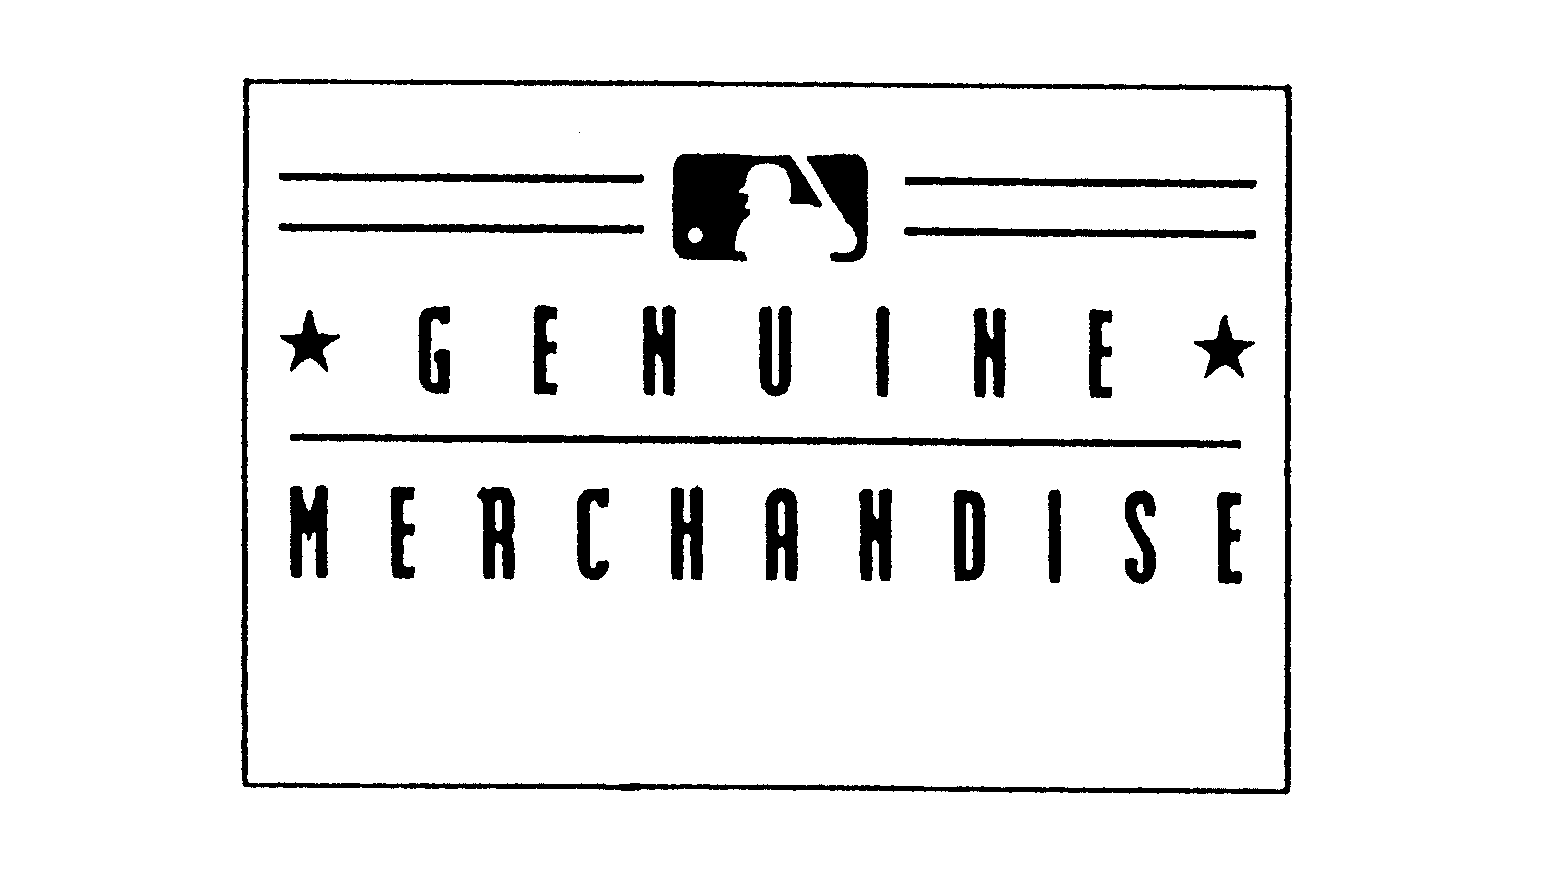 GENUINE MERCHANDISE - Major League Baseball Properties, Inc